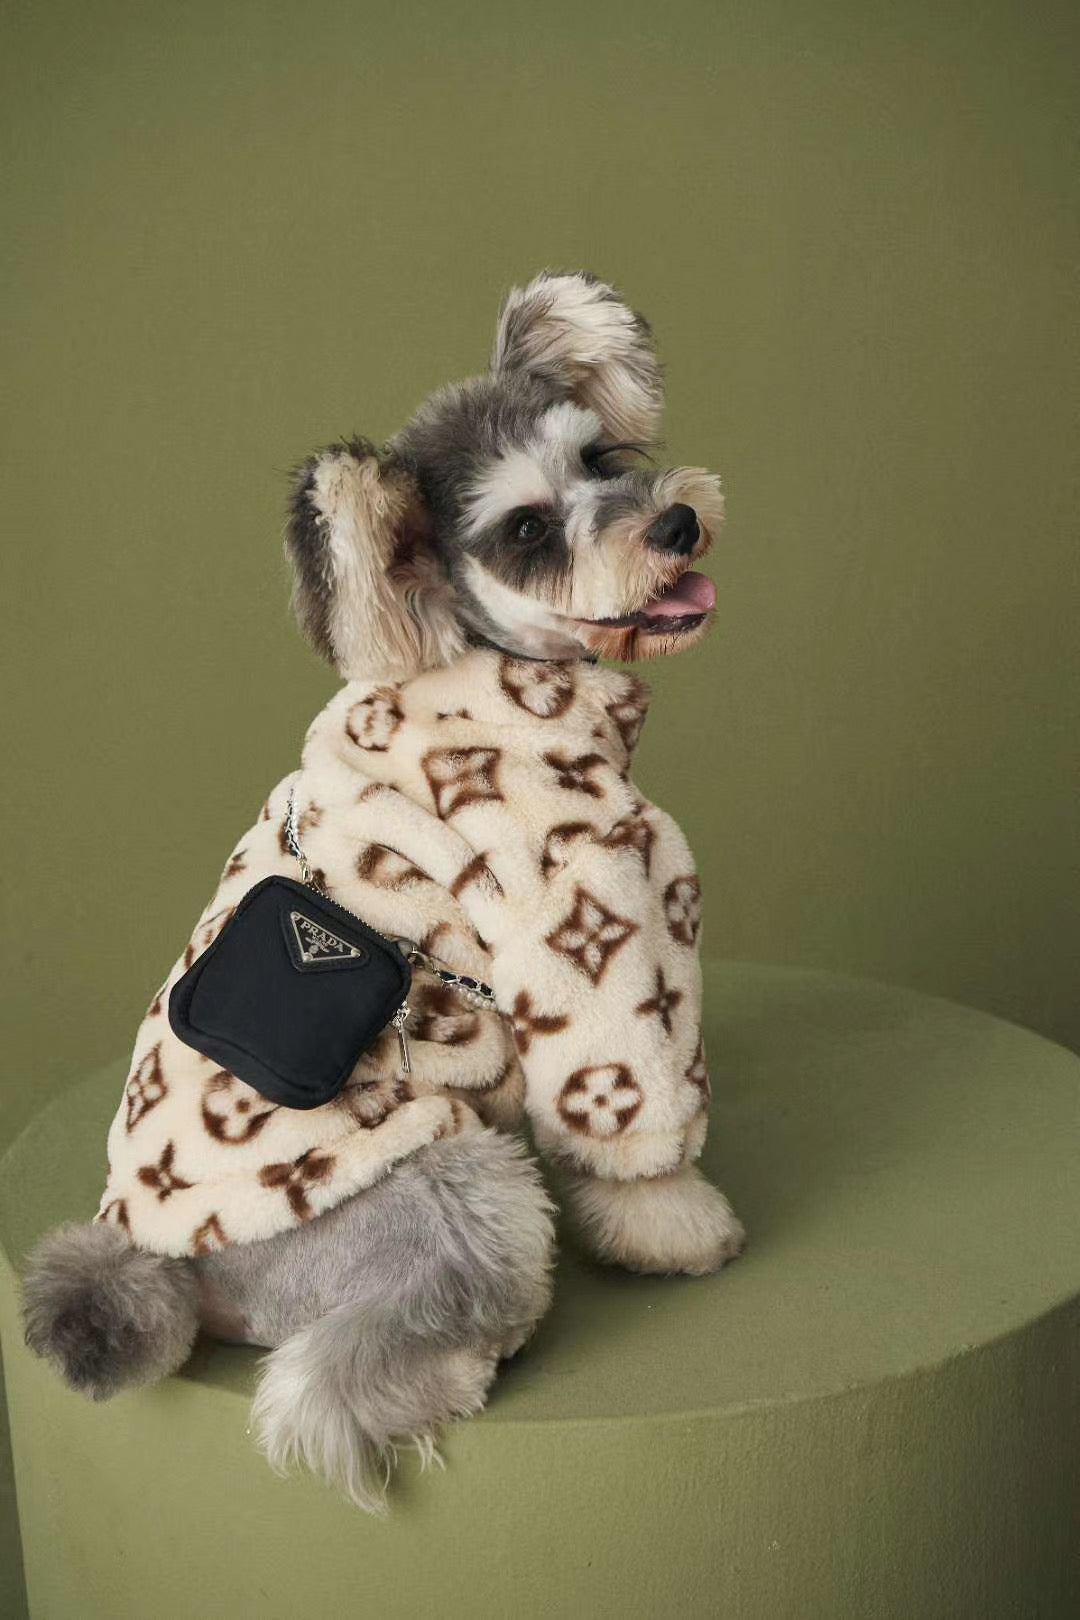 LV Dog Reflective Jacket – Purrfect Puppy